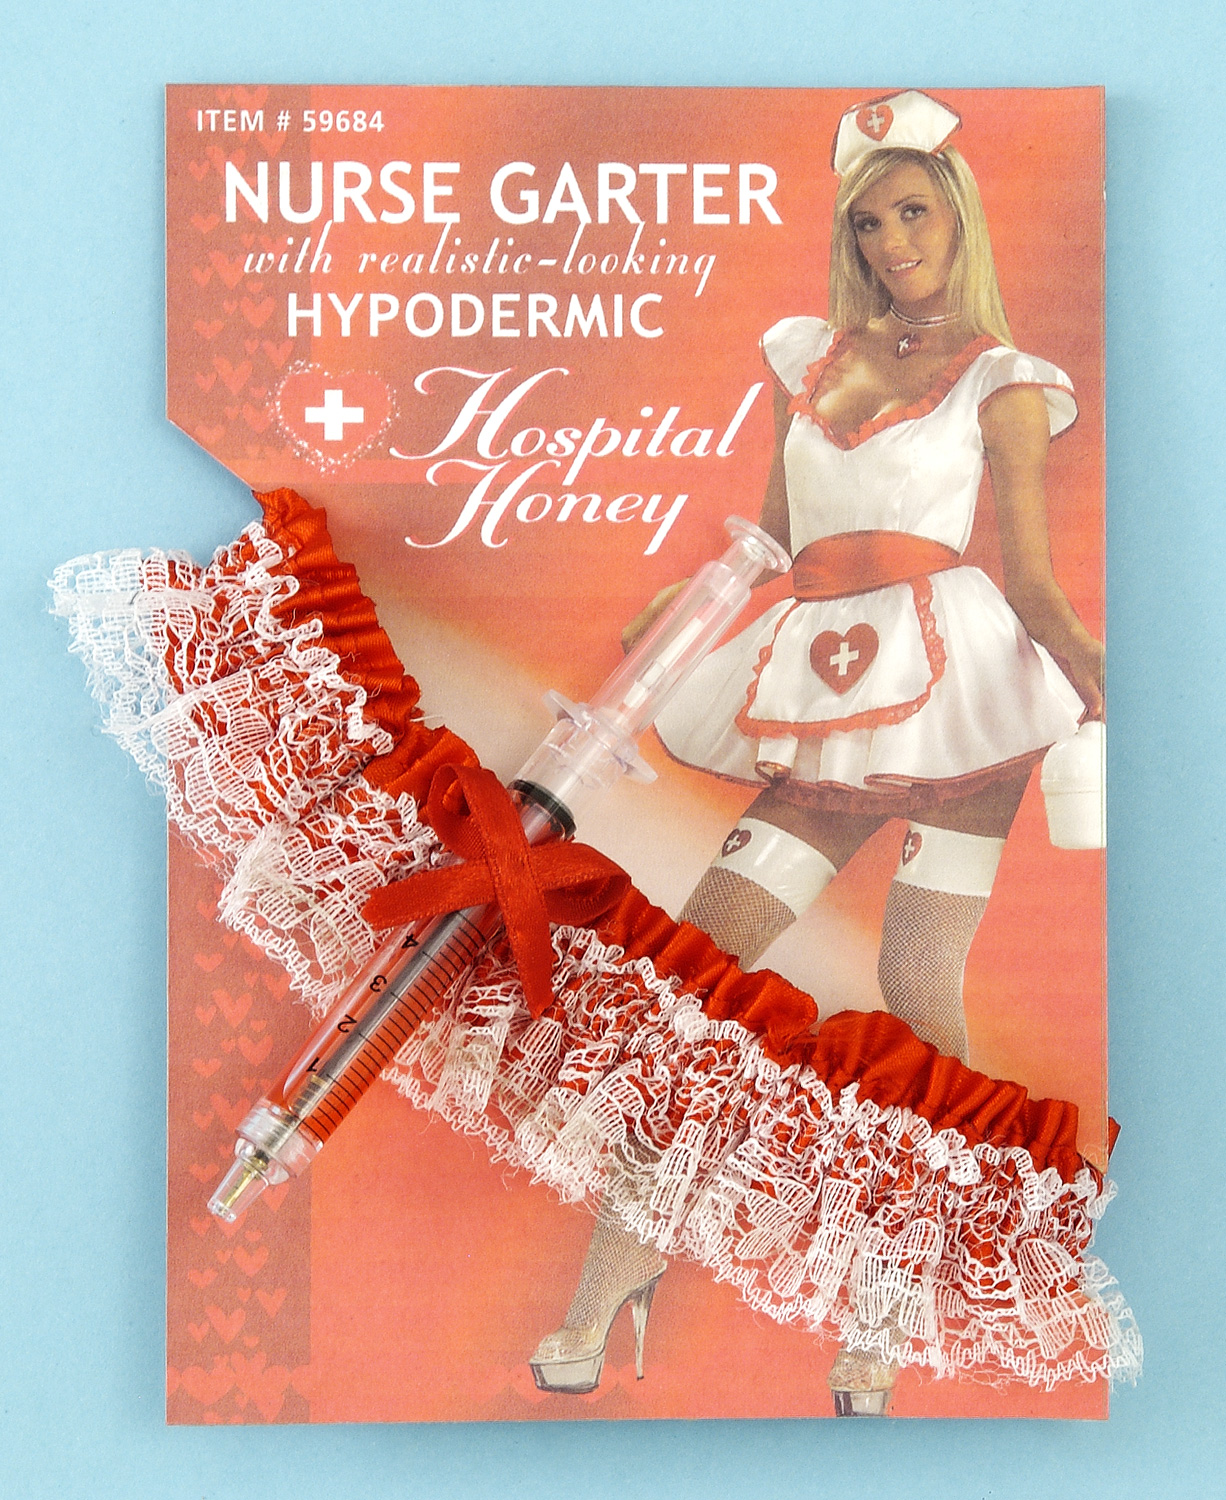 Forum Novelties Inc Women's Hospital Honey Garter With Hypo Needle - White - One Size